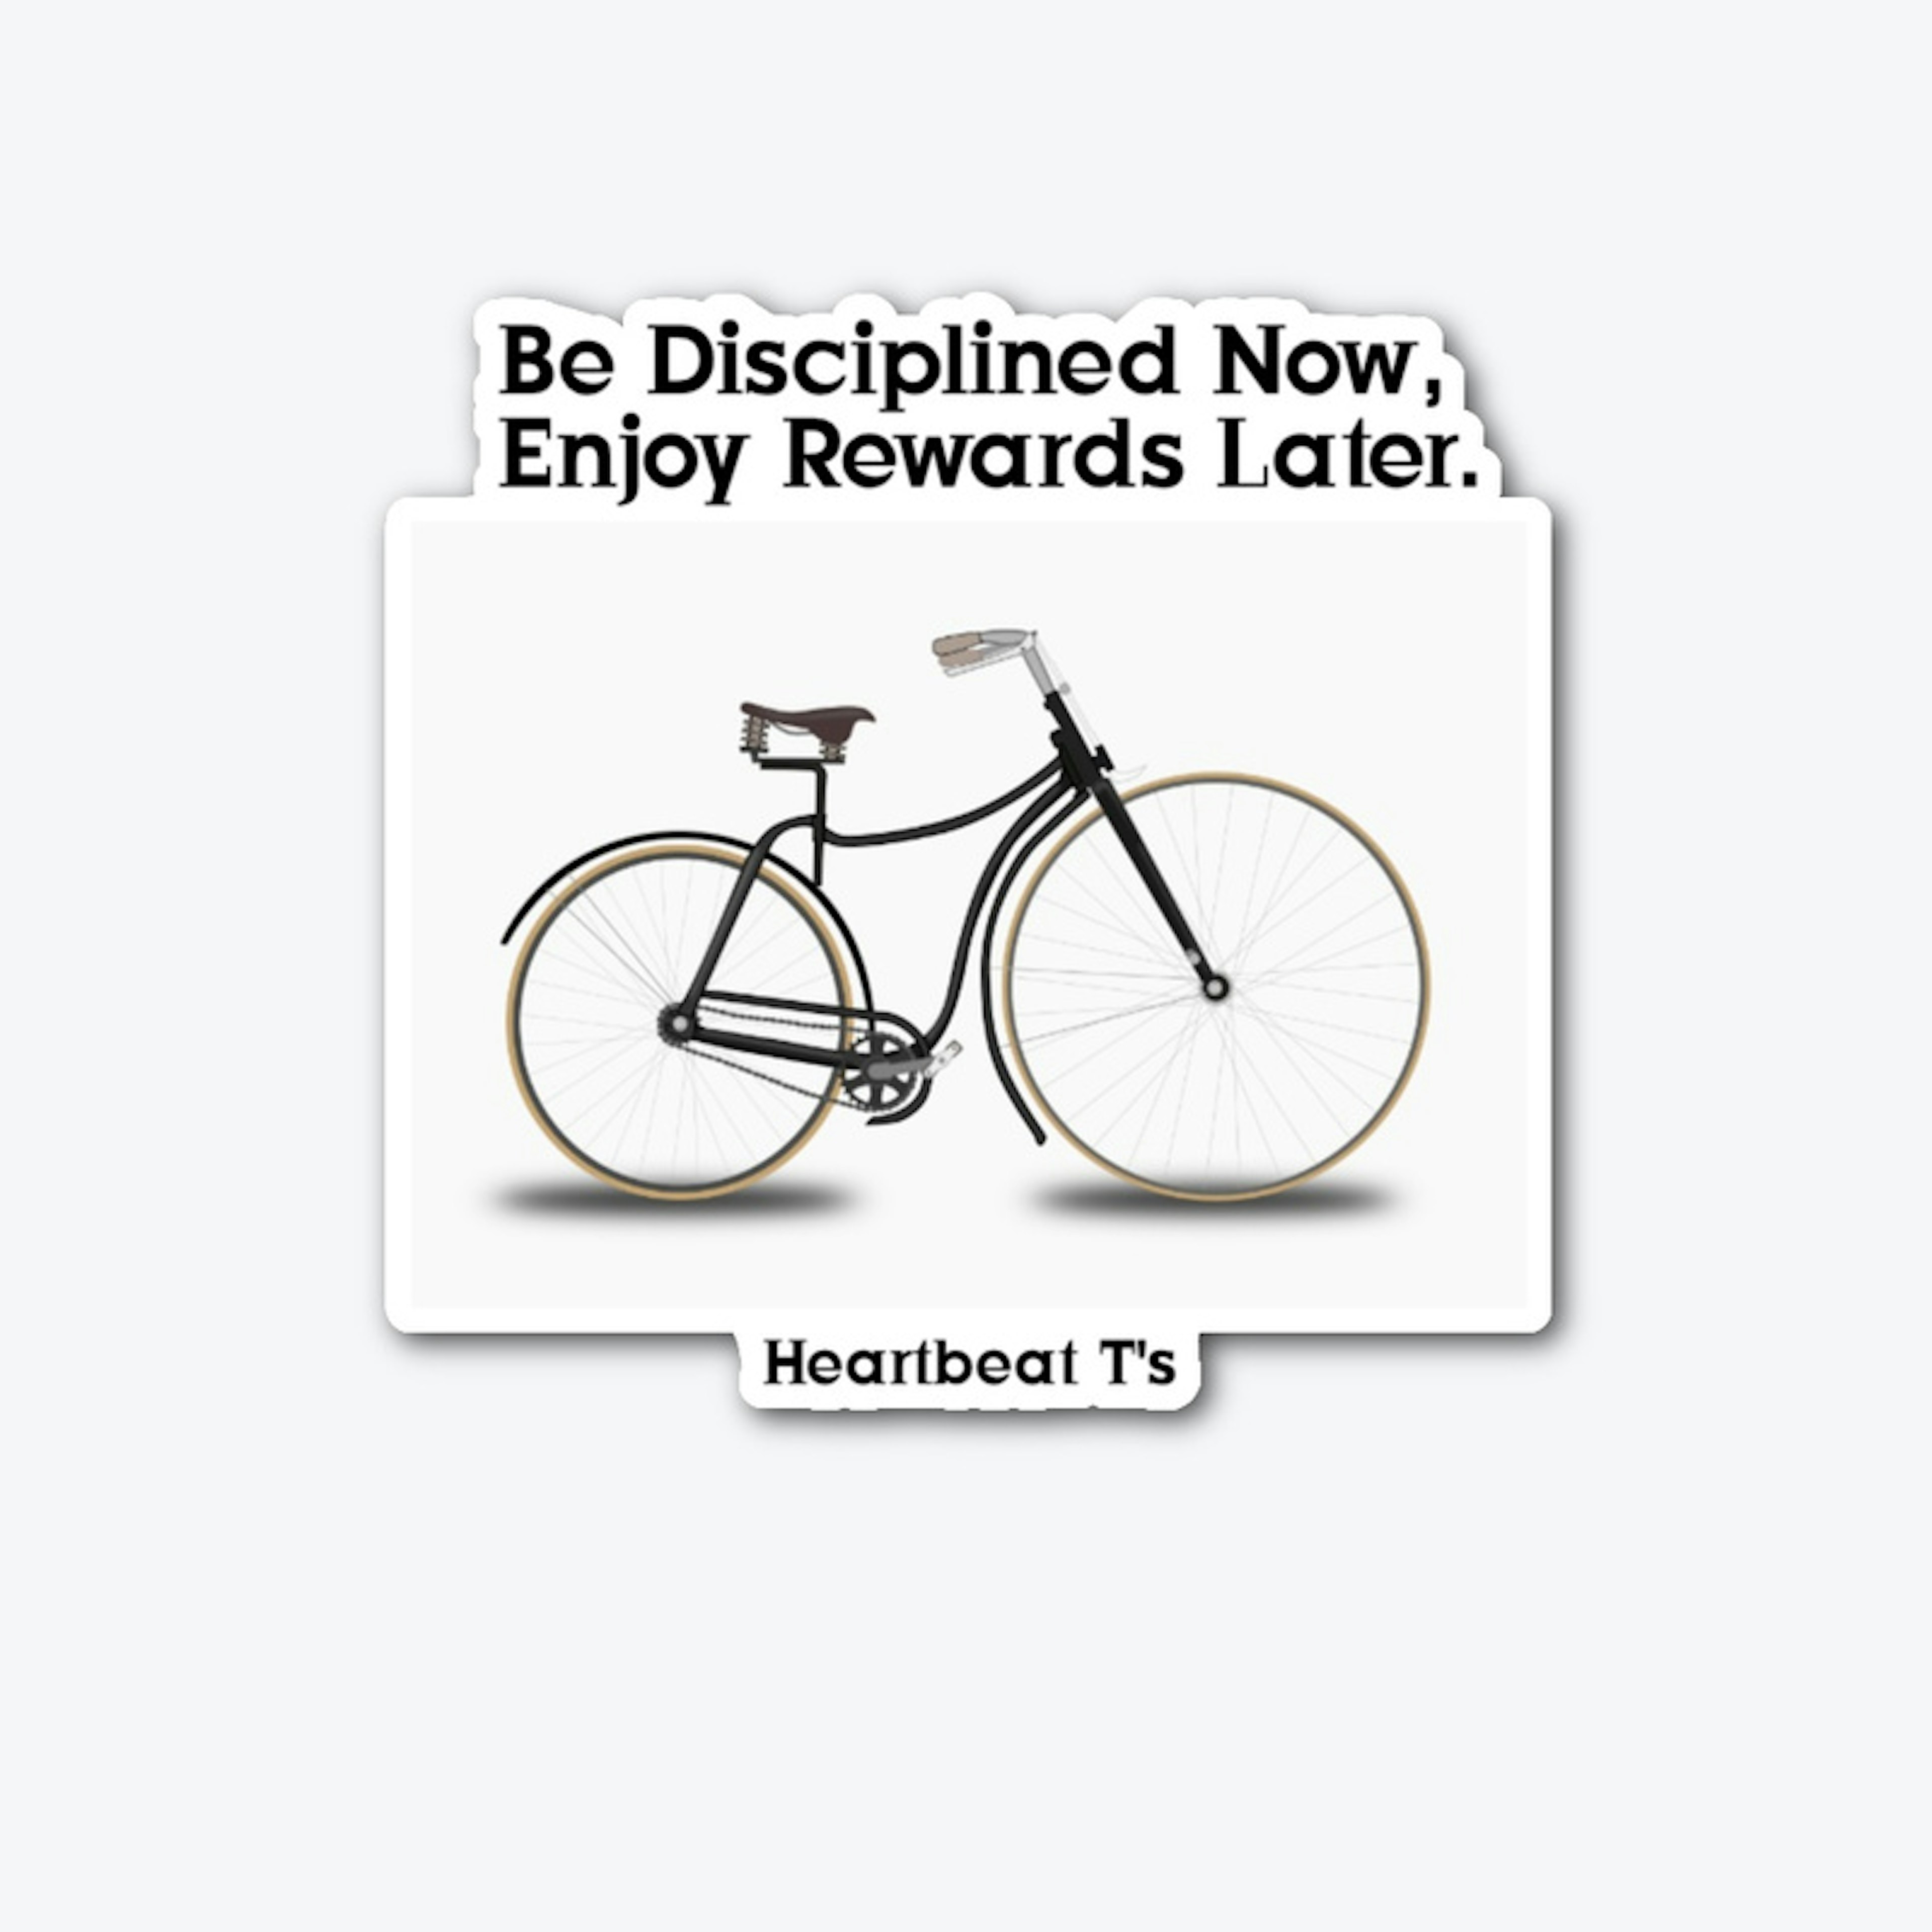 Be Disciplined Now, Enjoy Rewards Later.